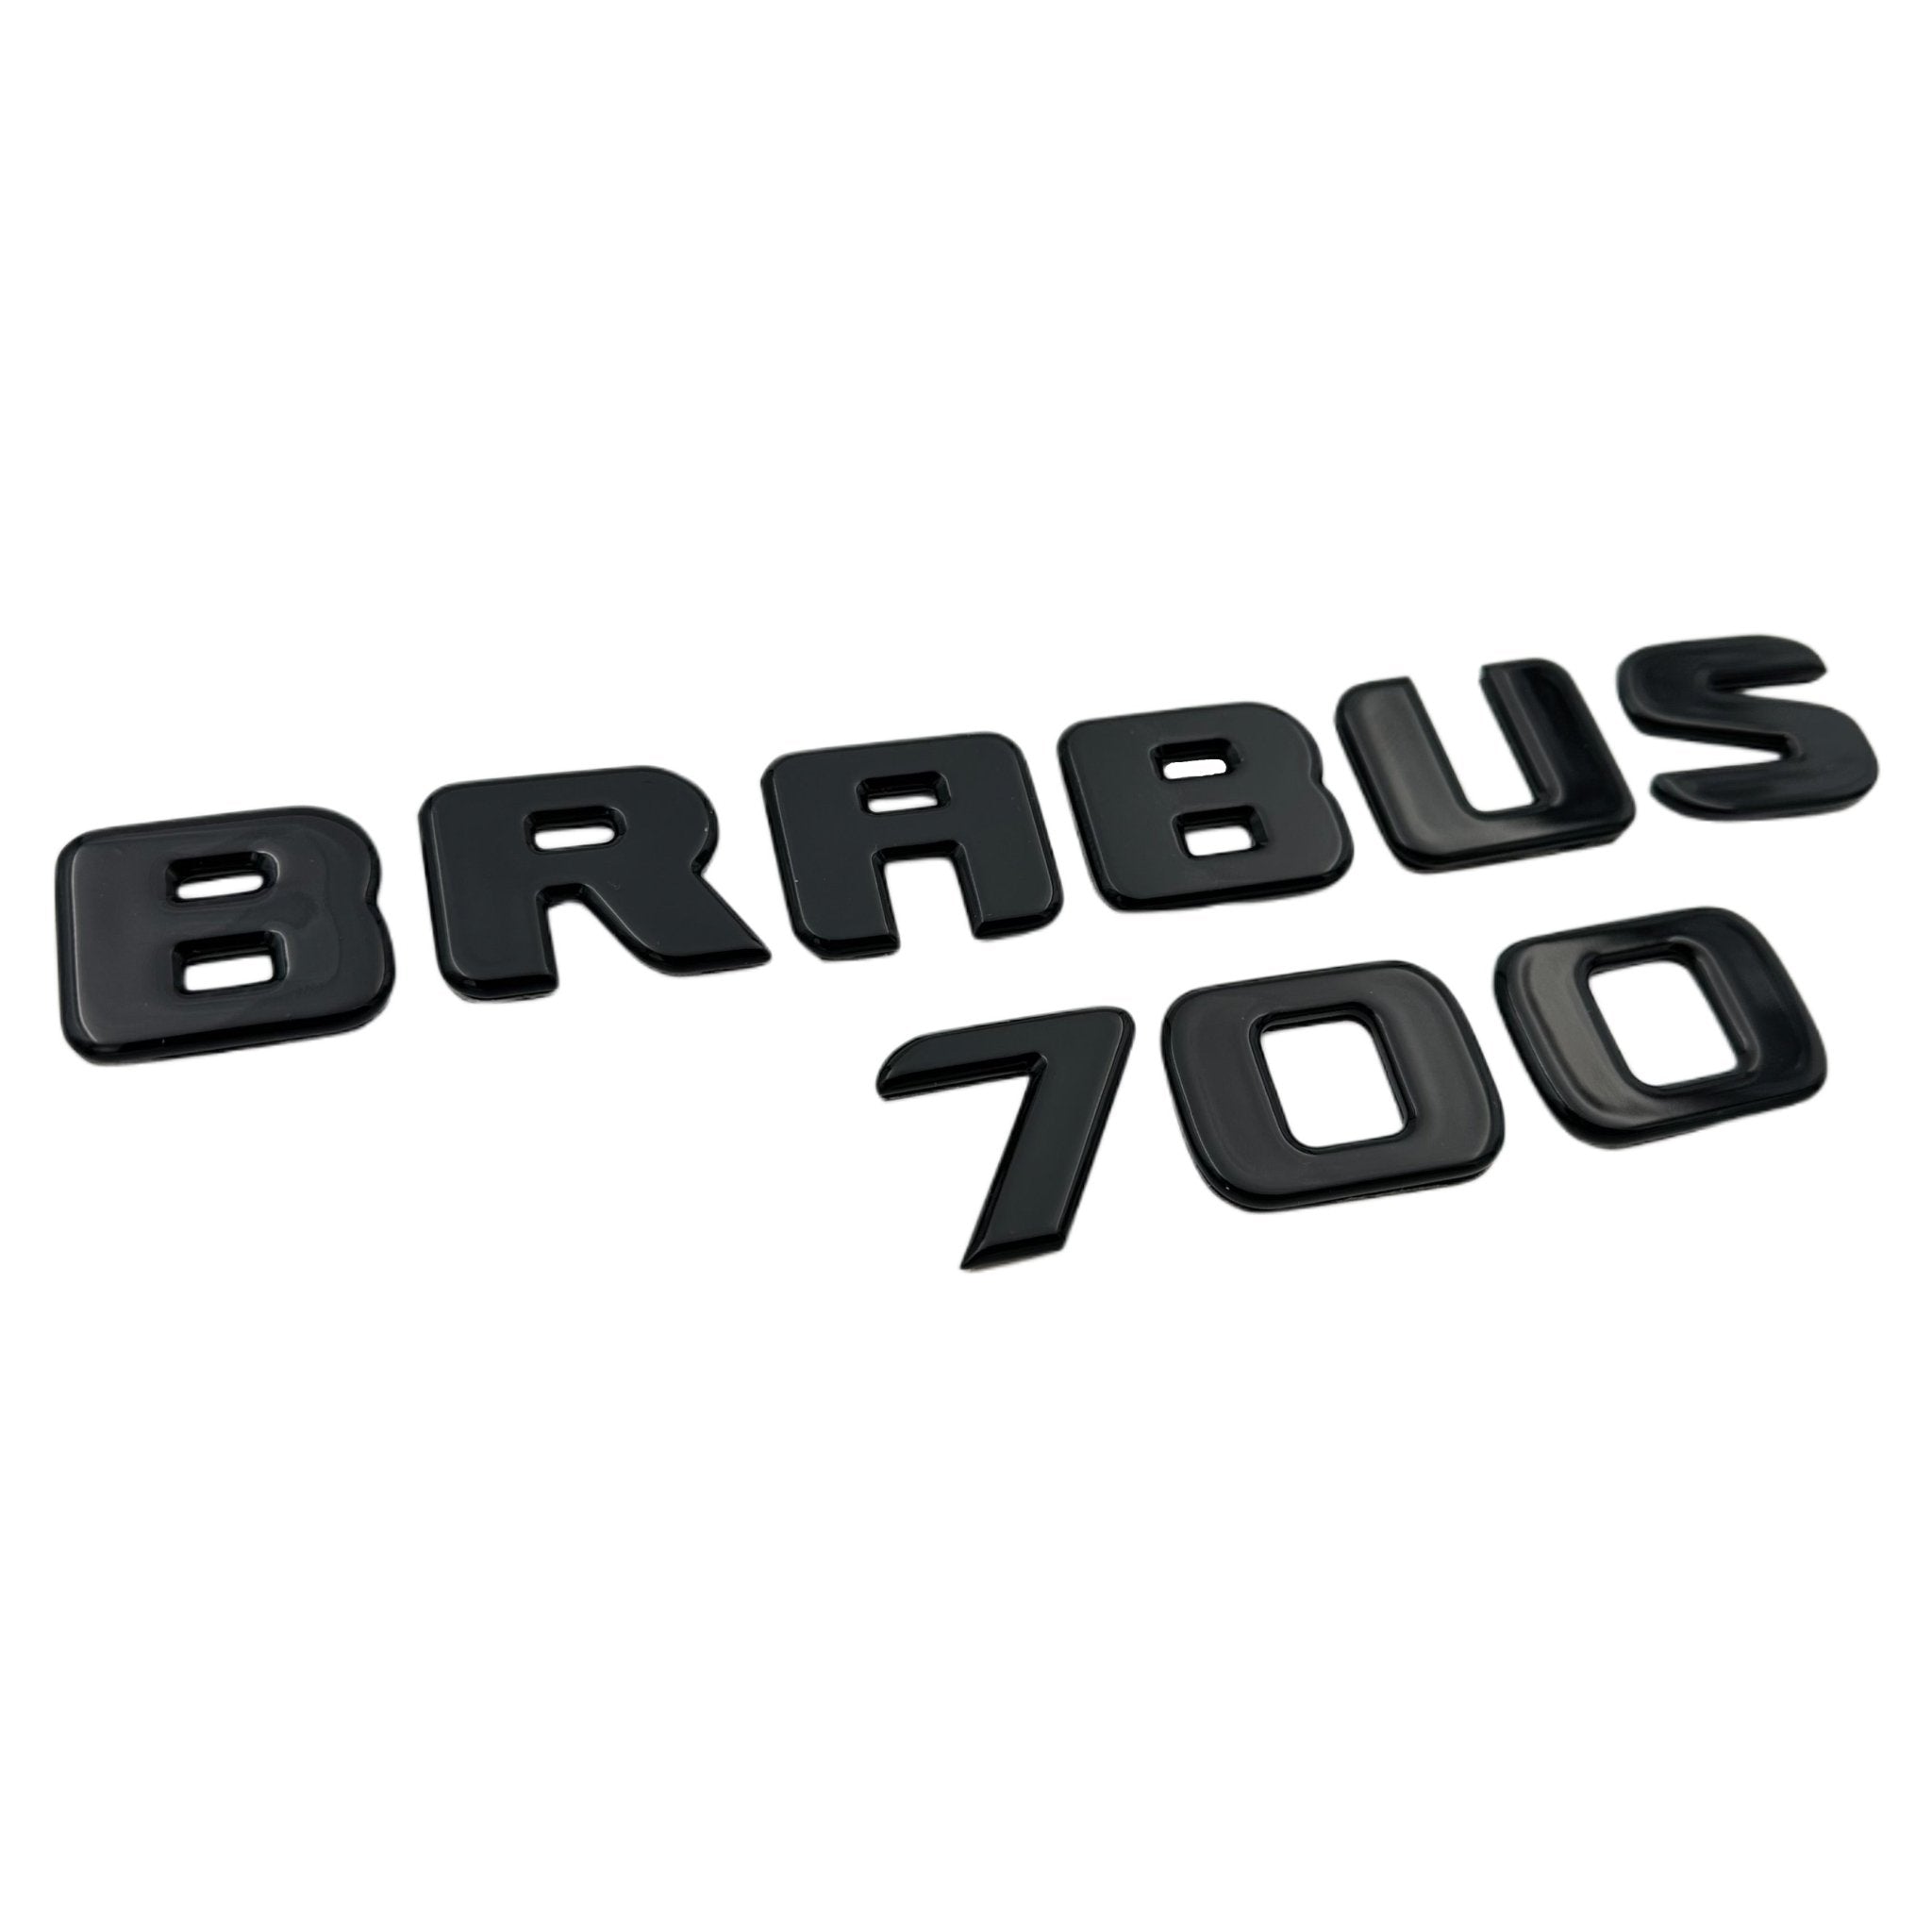 Metallic Brabus 700 rear trunk letters emblem logo badges for Mercedes-Benz G-Class W463 W463A